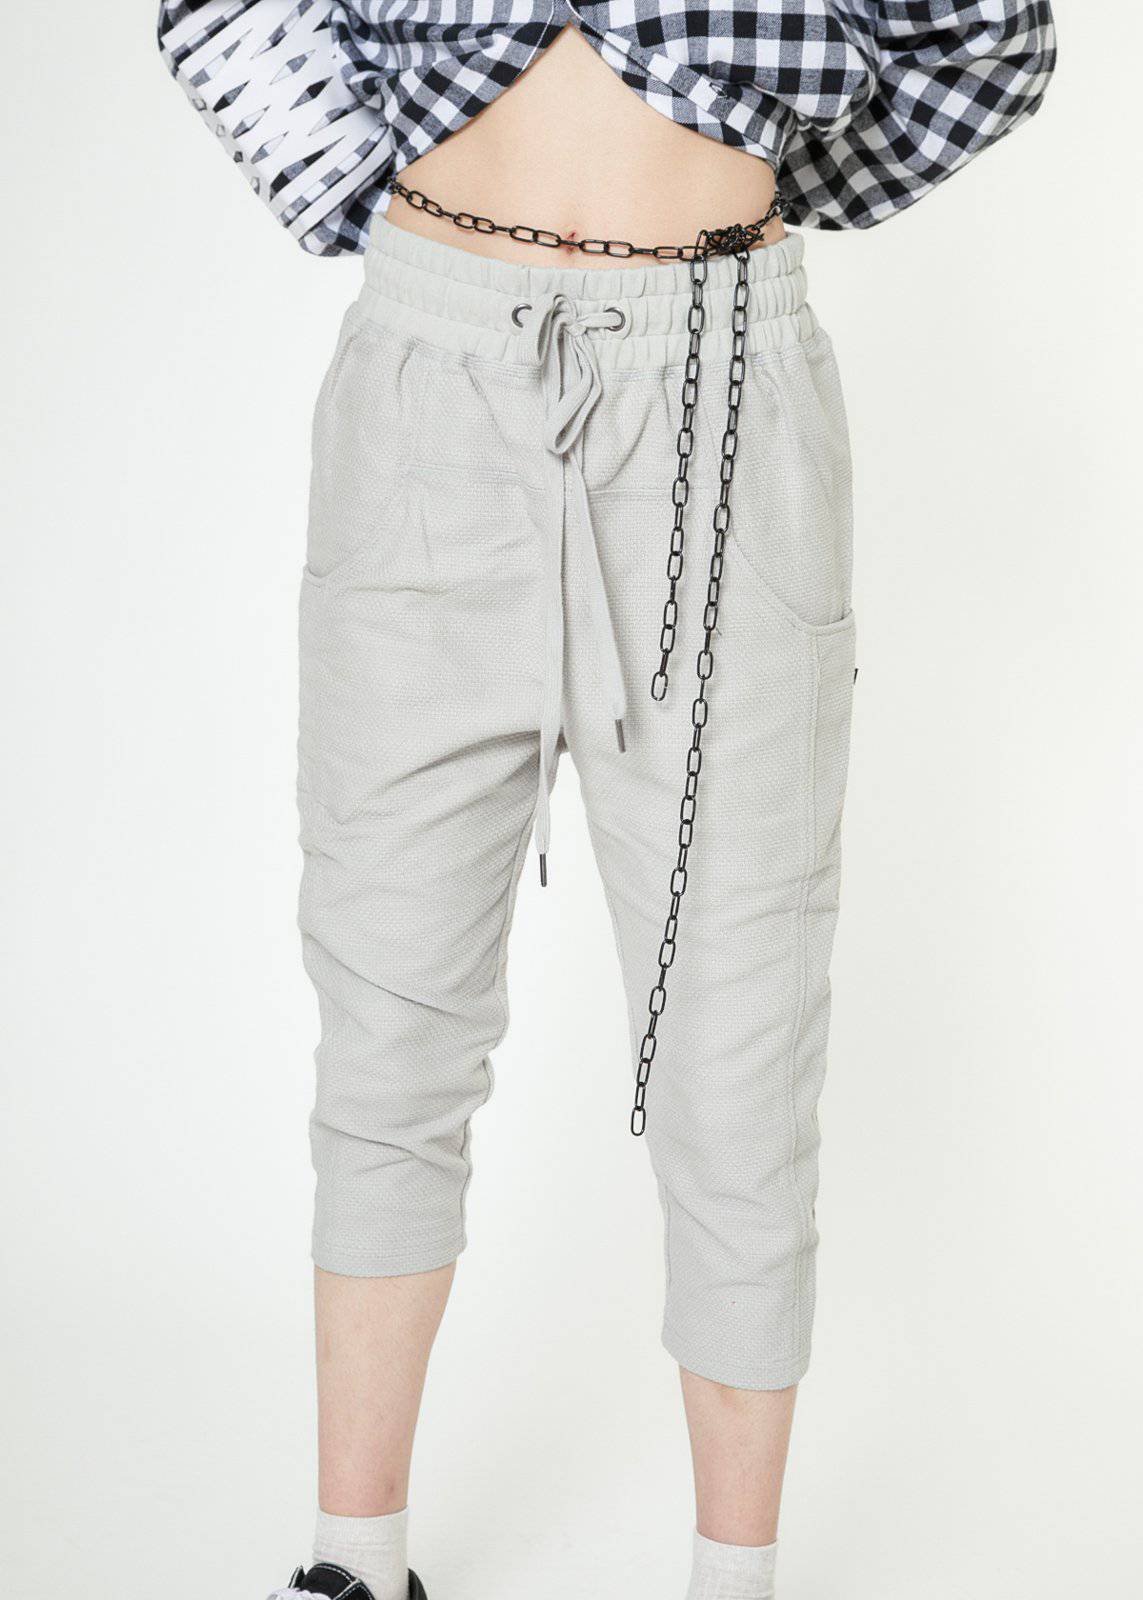 Konus Men's Cropped Pants With Side Panels in Grey by Shop at Konus